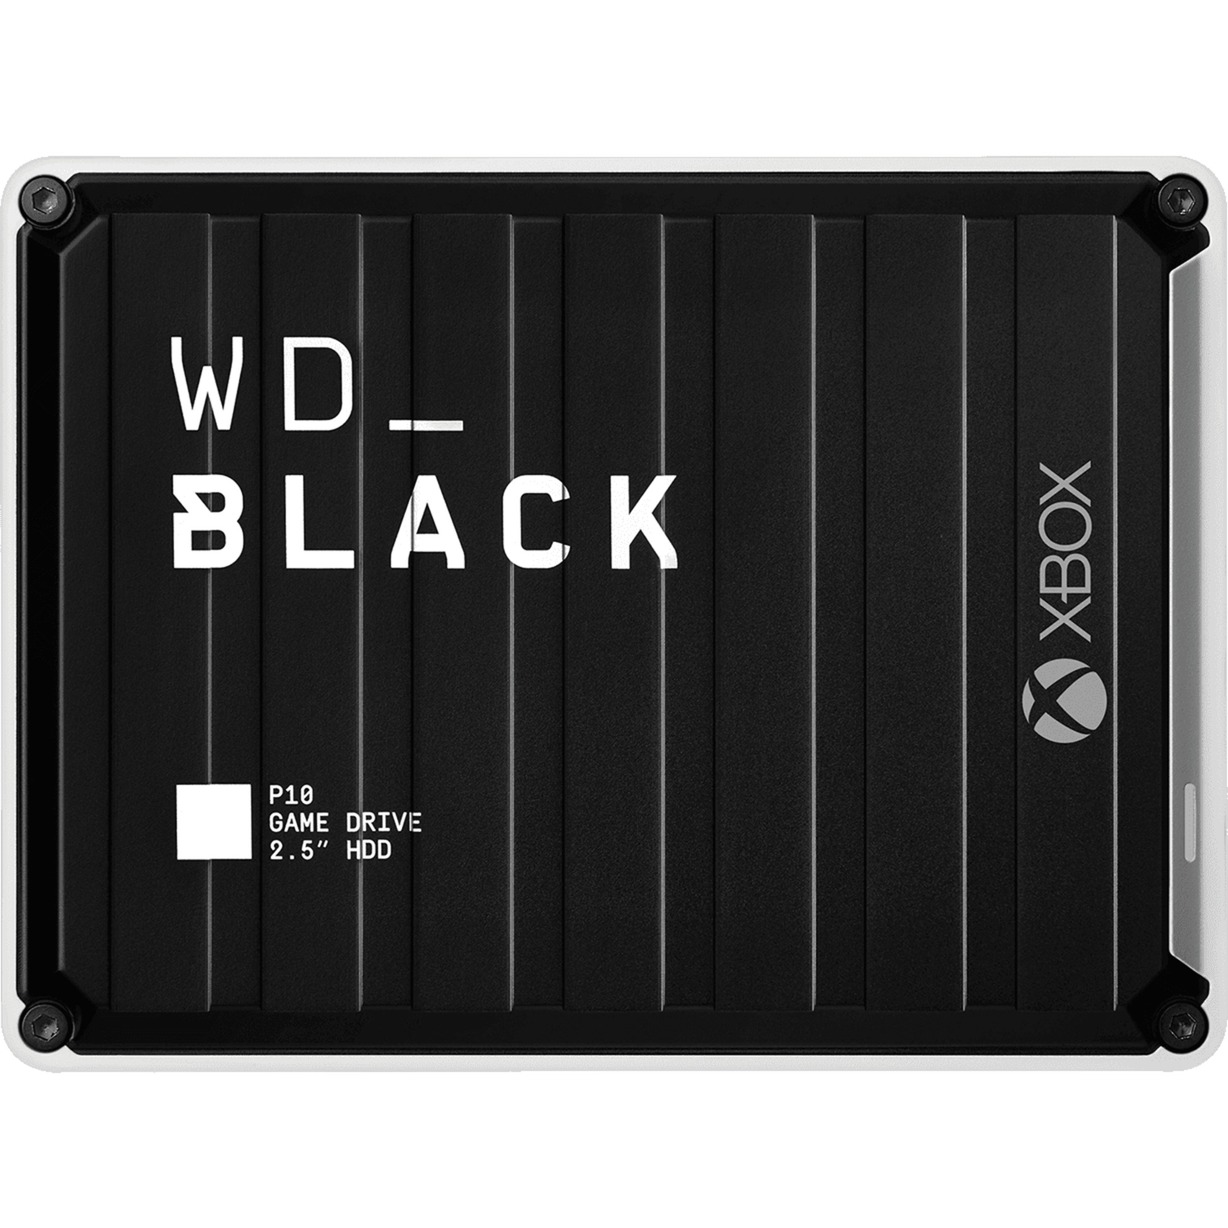 Image of Alternate - Black P10 Game Drive for Xbox 5 TB, Externe Festplatte online einkaufen bei Alternate